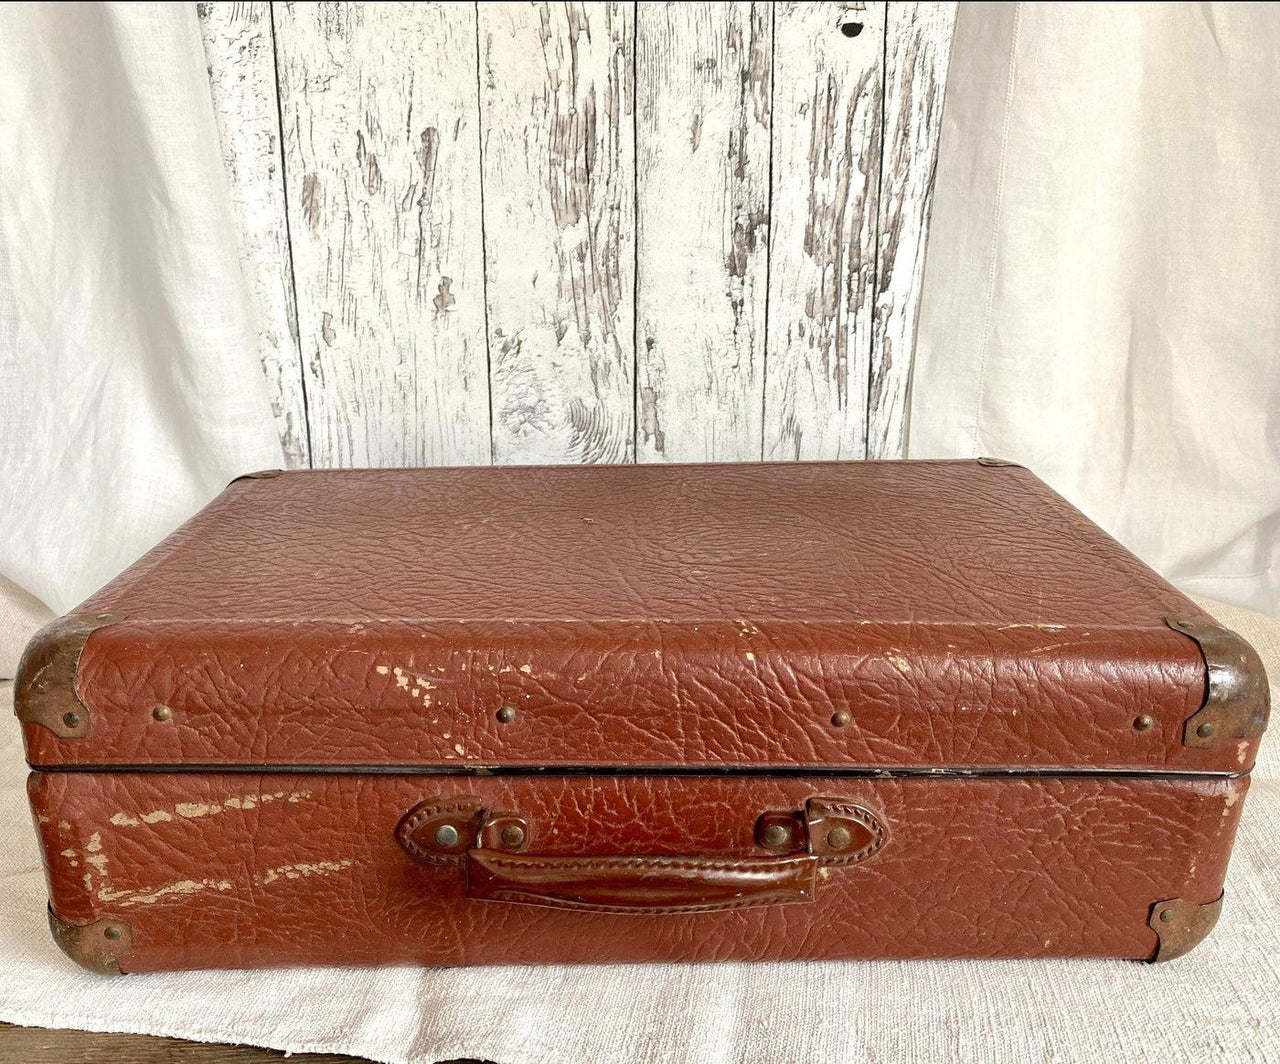 Antique Canvas Gladstone Bag 1800s Victorian Foldable Travel 